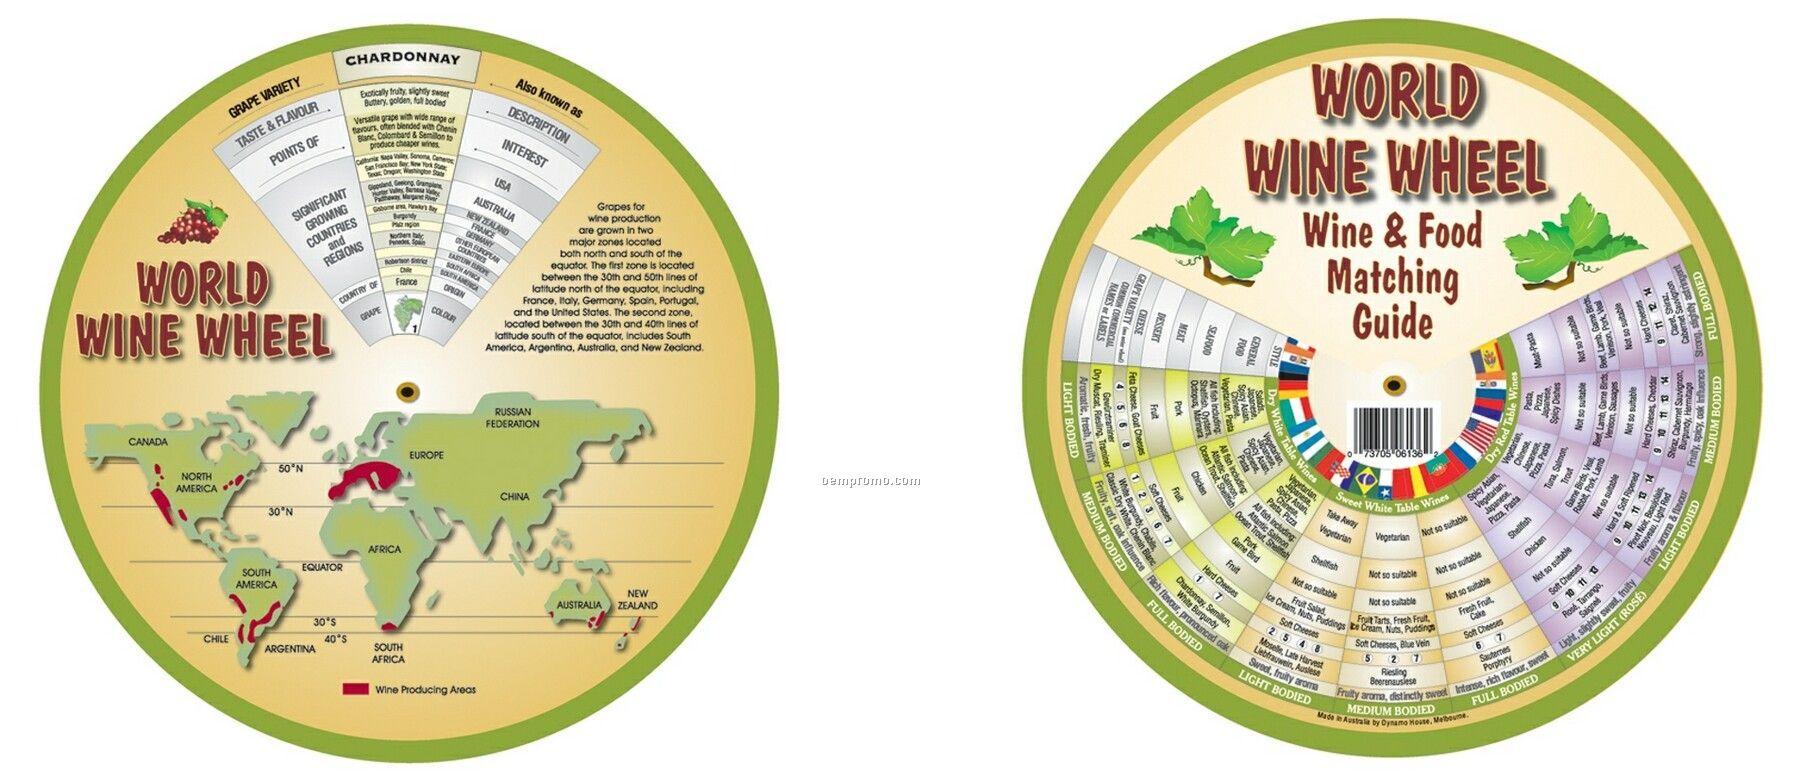 World Wine Wheel And Wine & Food Matching Guide